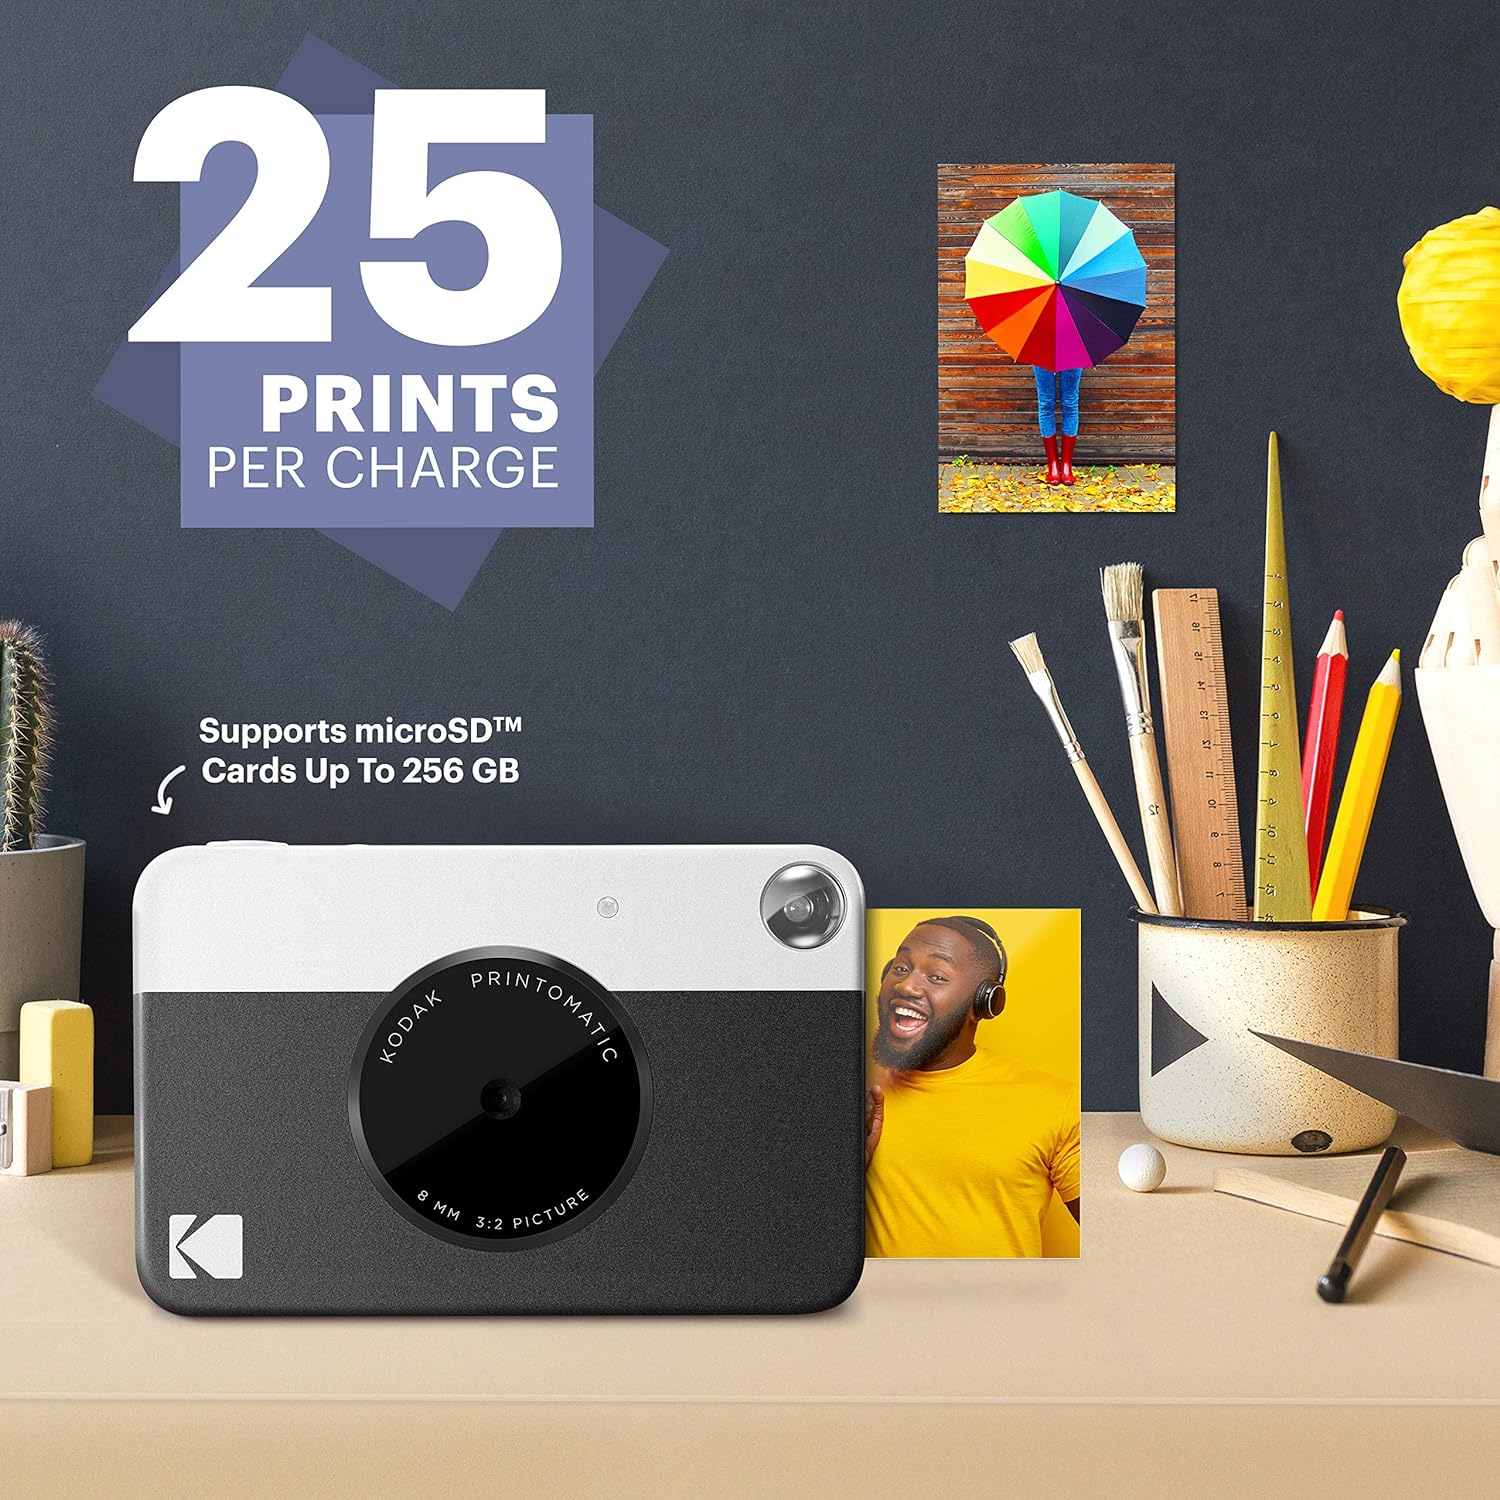 Kodak PRINTOMATIC Digital Instant Print Camera (Black), Full Color Prints On Zink 2x3 Sticky-Backed Photo Paper - Print Memories Instantly